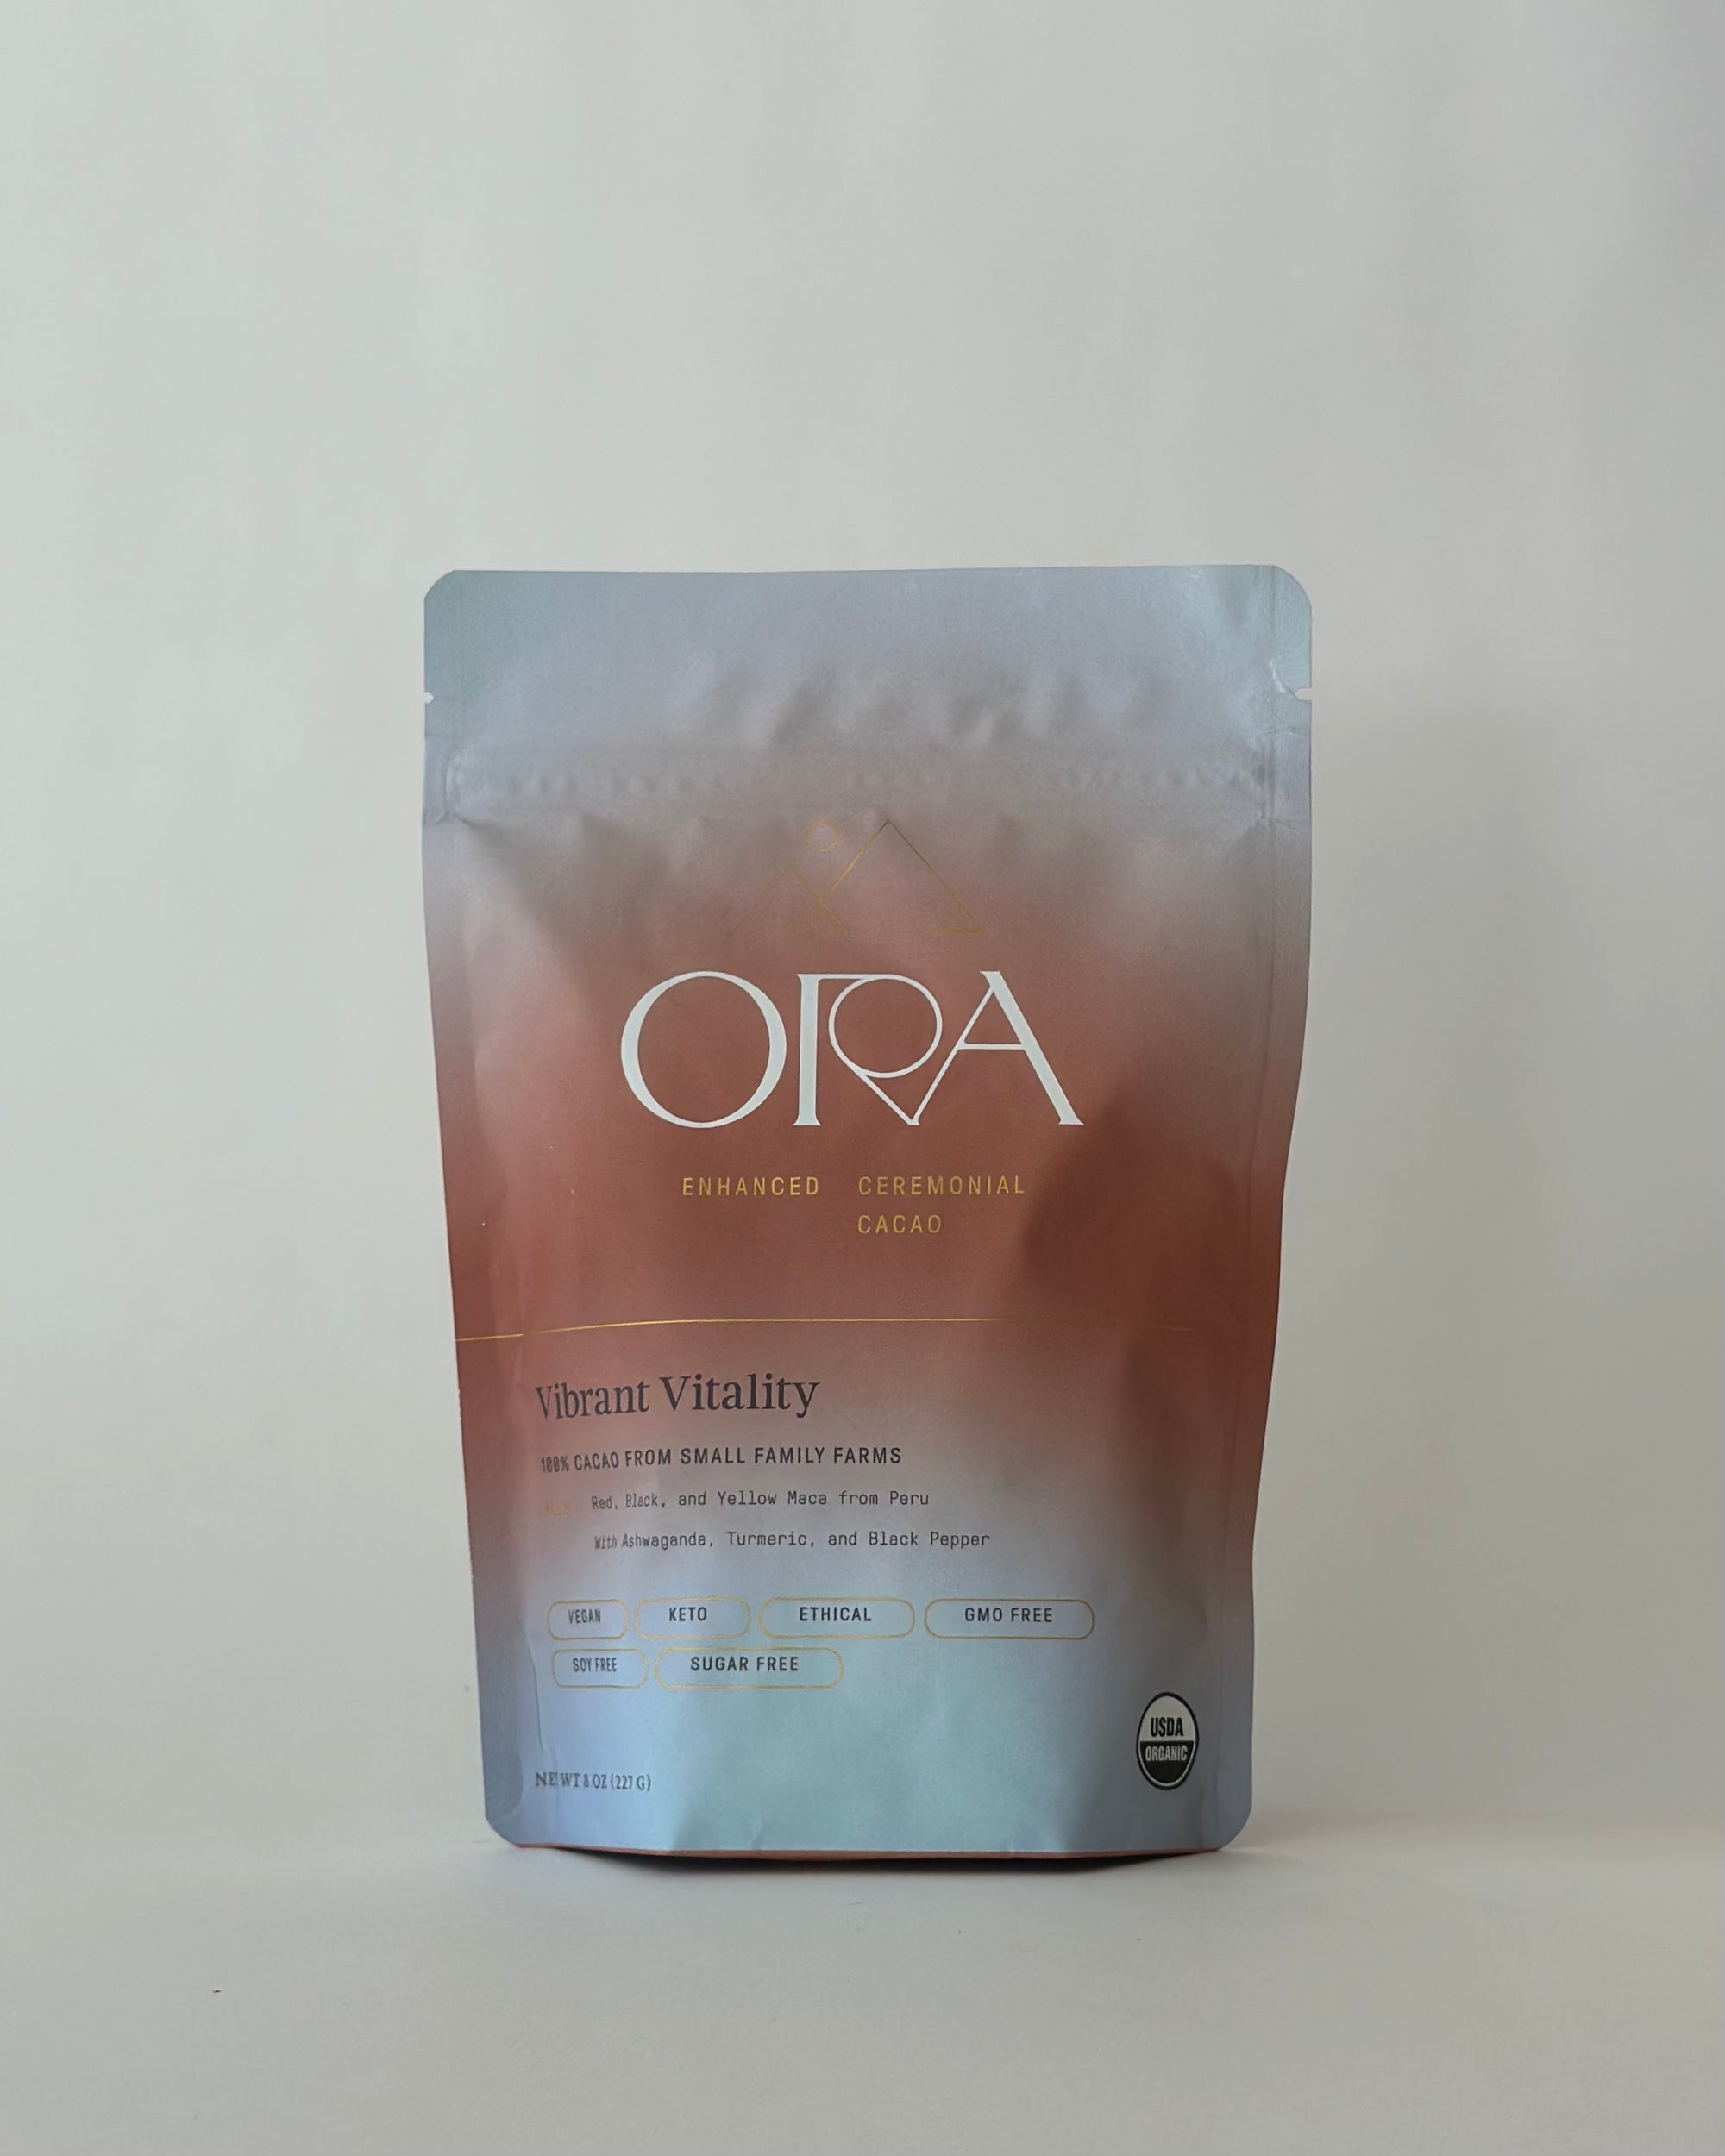 ORA Cacao - Vibrant Vitality Enhanced Cacao